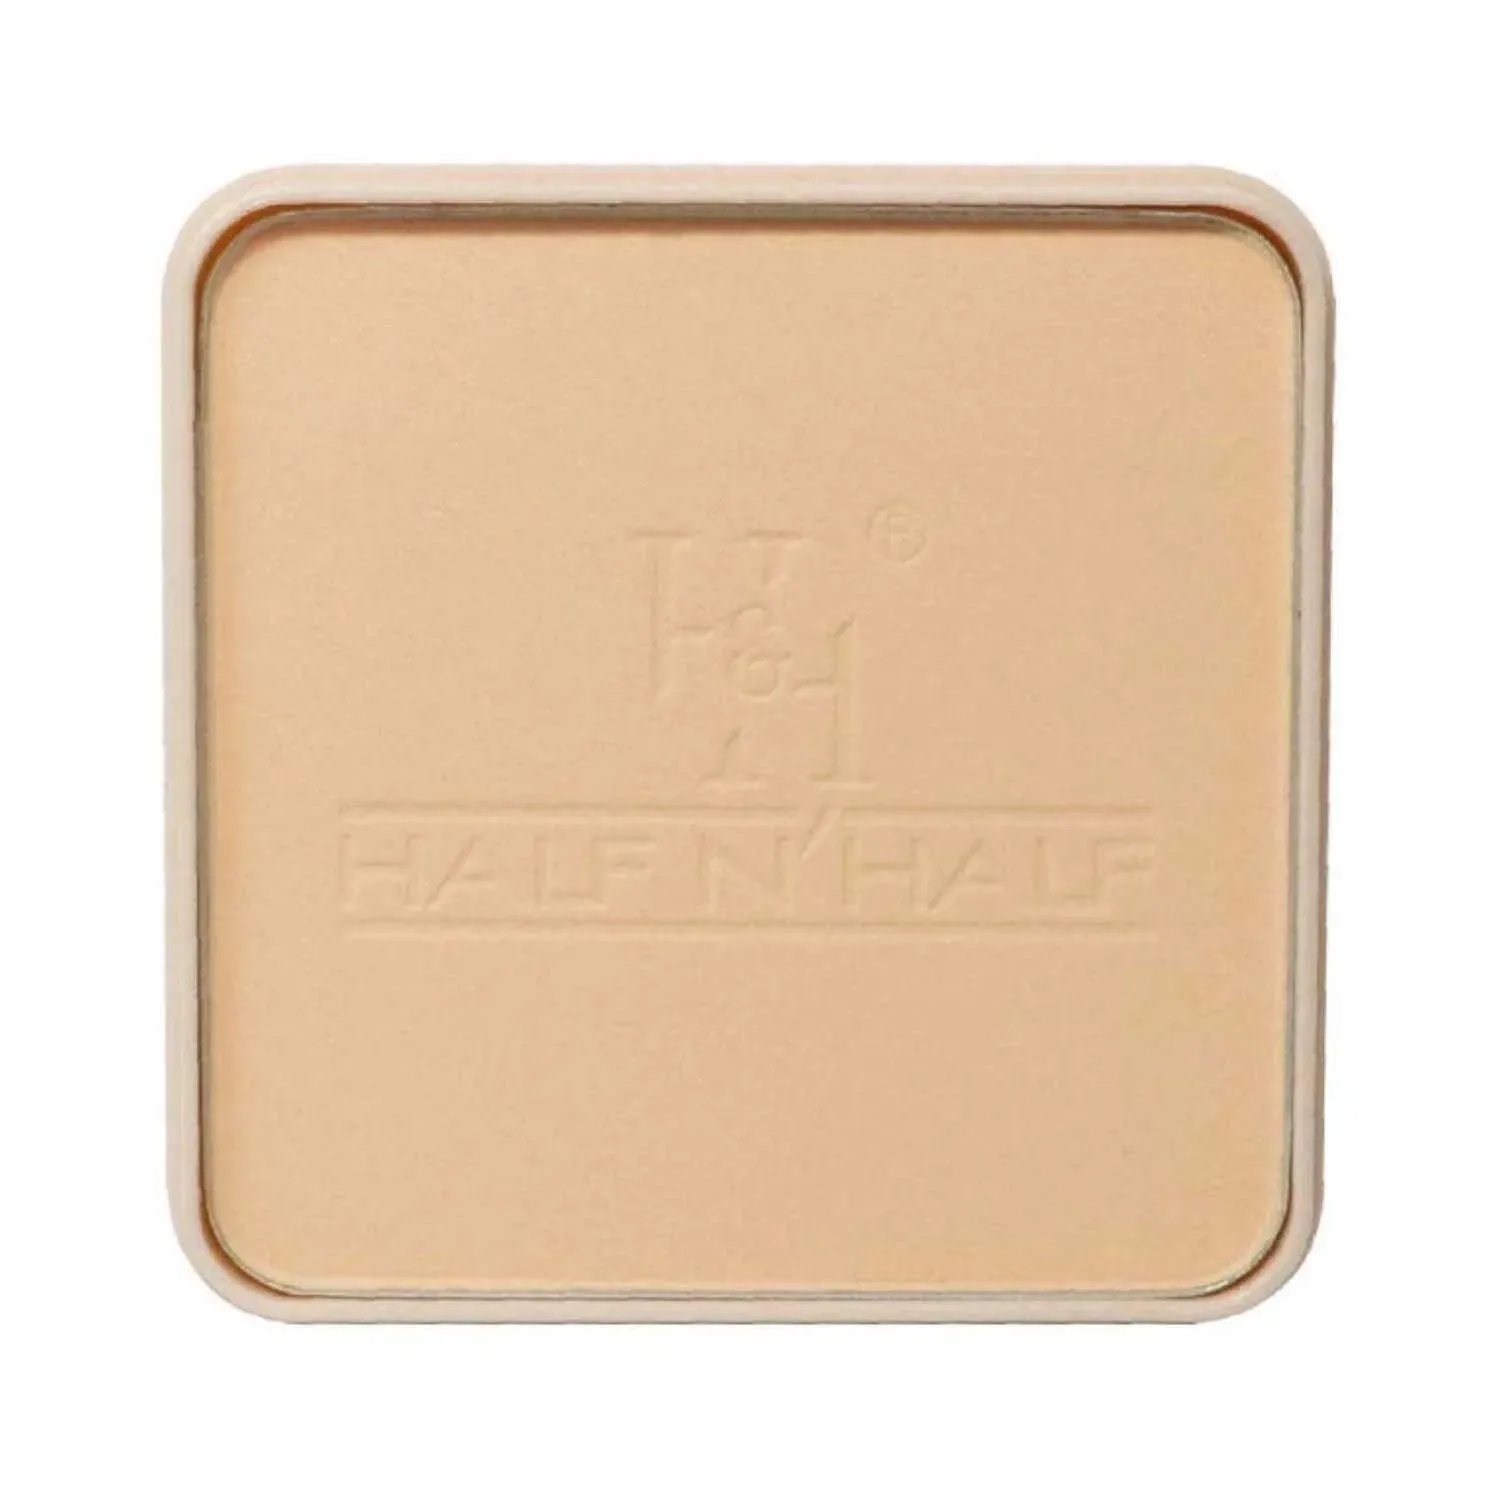 Half N Half | Half N Half BB Mineral Powder Vitamins Skin Whitening Compact - 03 Neutral (20g)